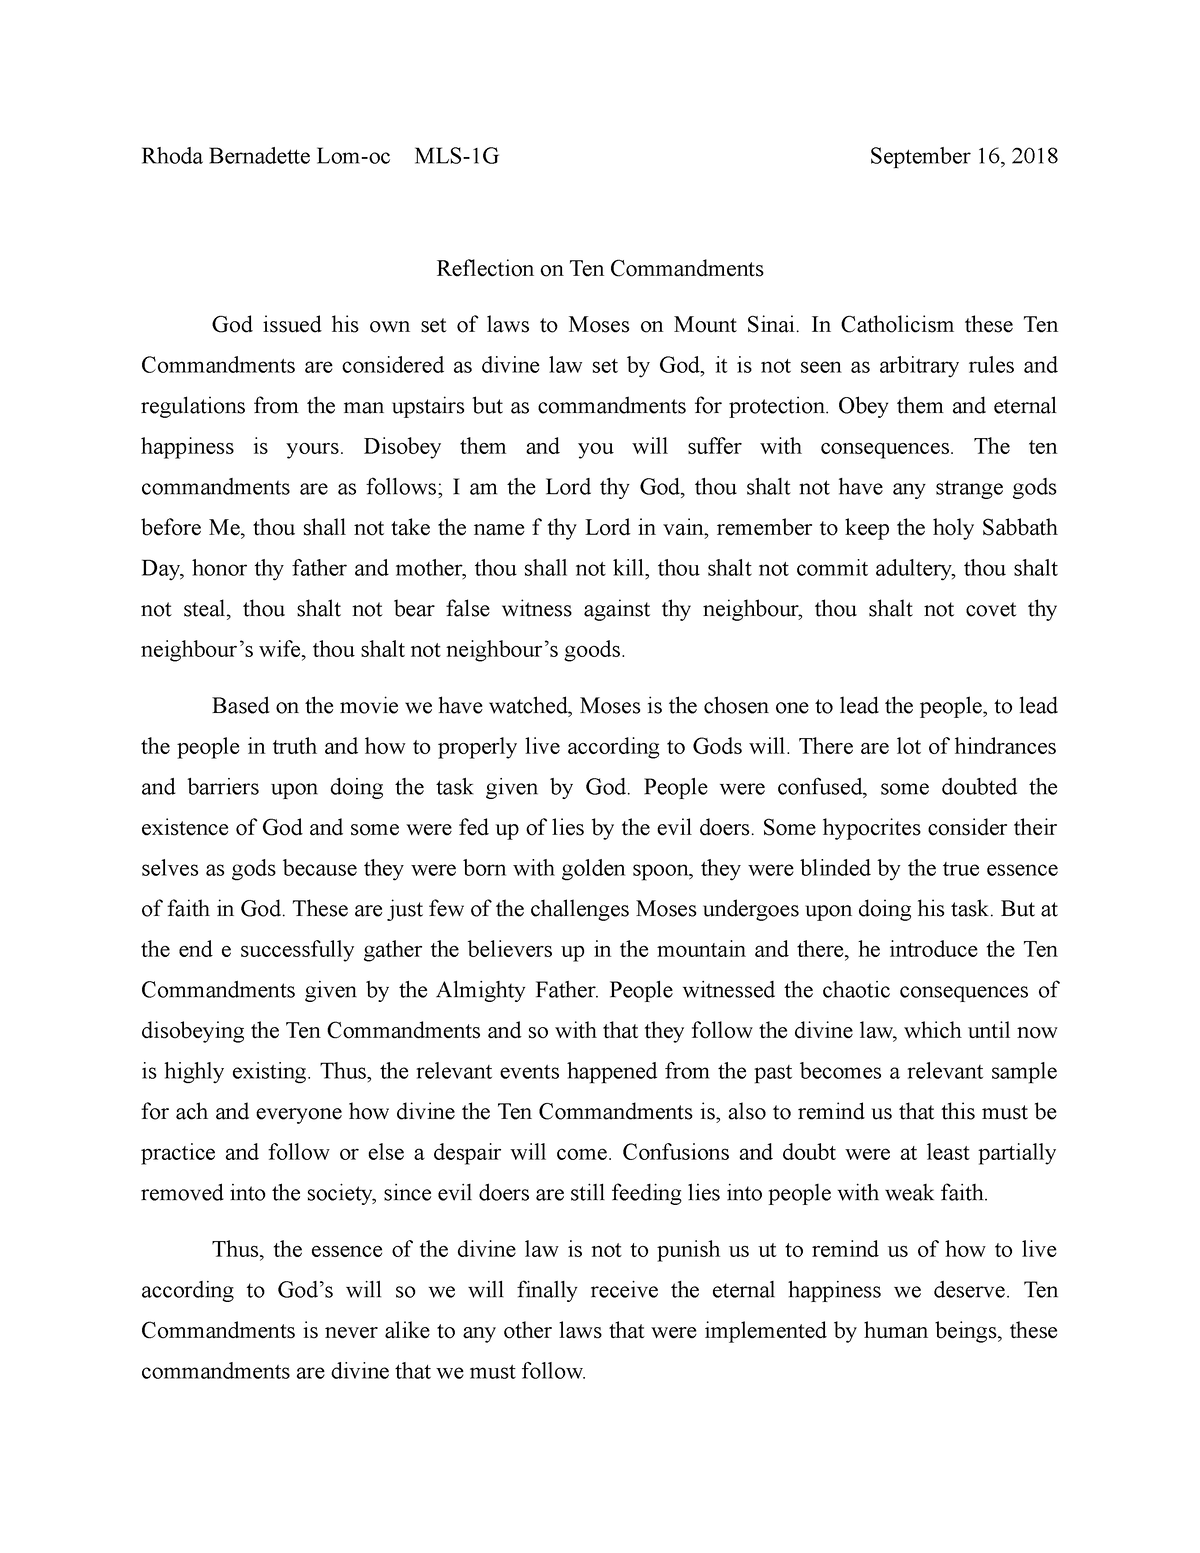 Reflection Ten Commandments assignment essay - Rhoda Bernadette Lom-oc ...